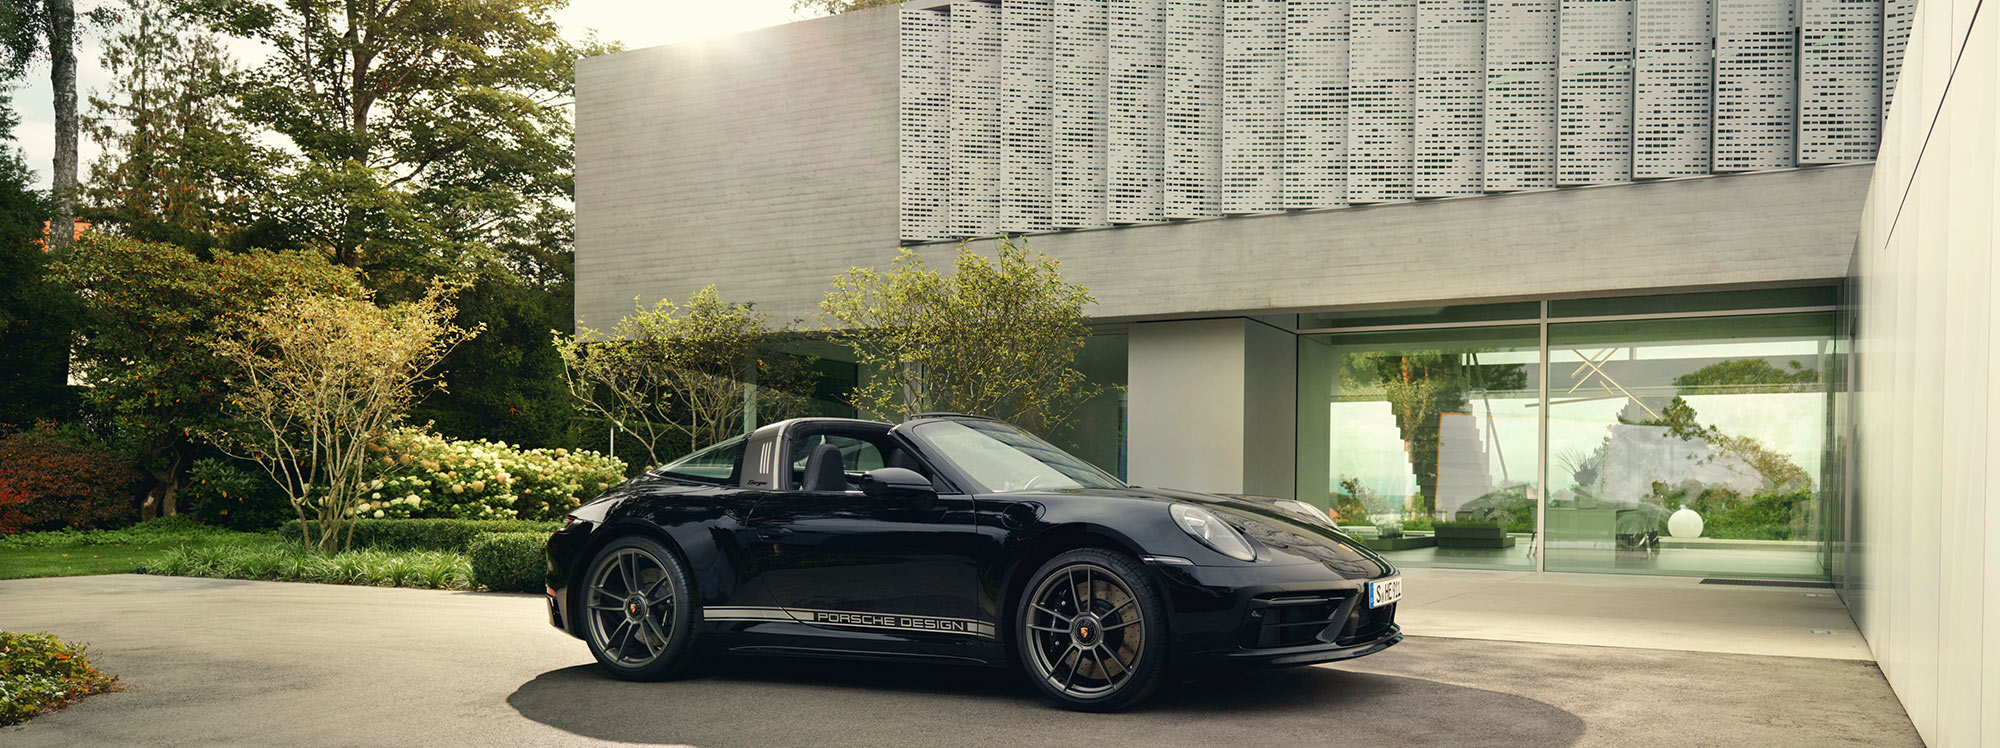 Porsche 911: la versión moderna de un auto clásico